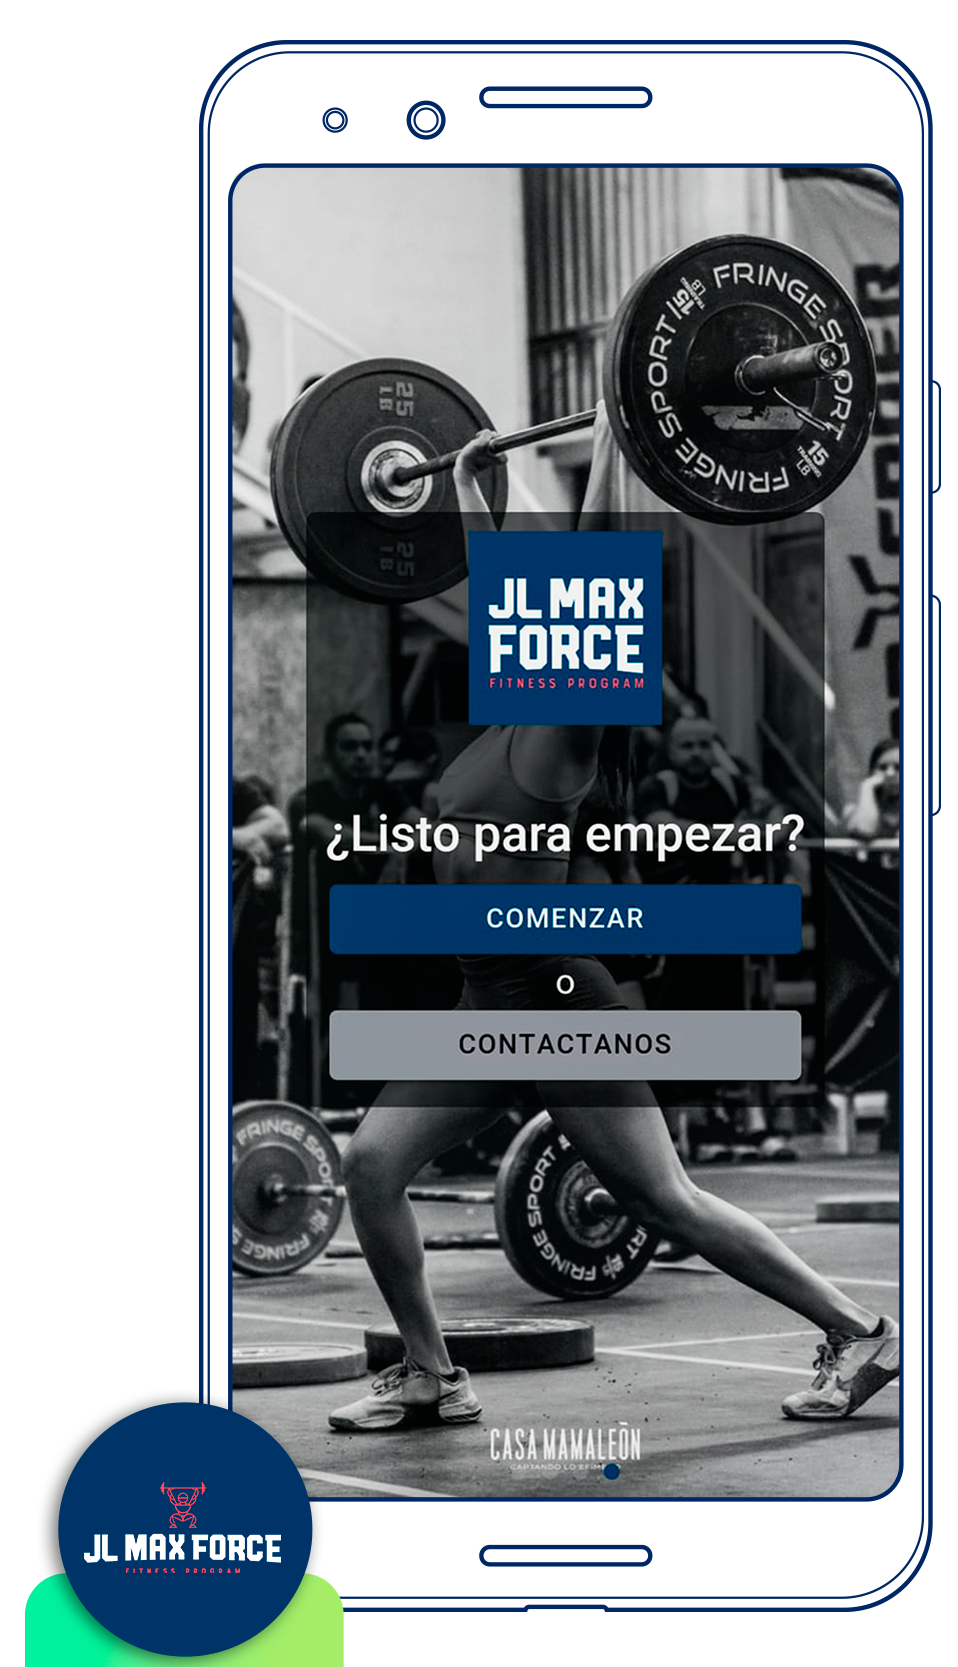 JL Max Force